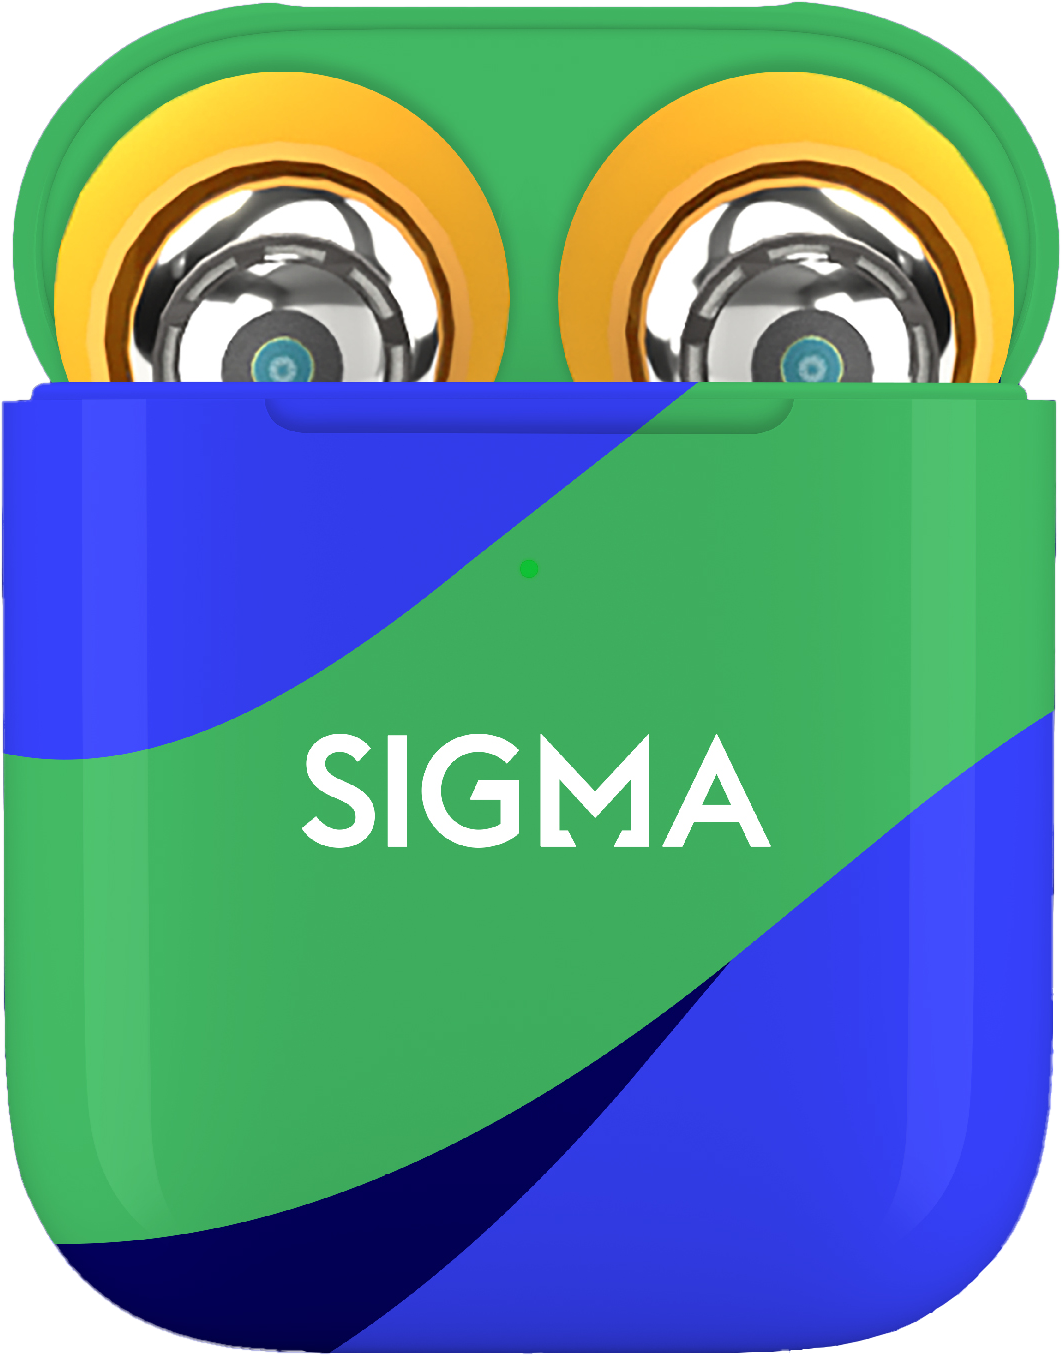 Sigma pods in case